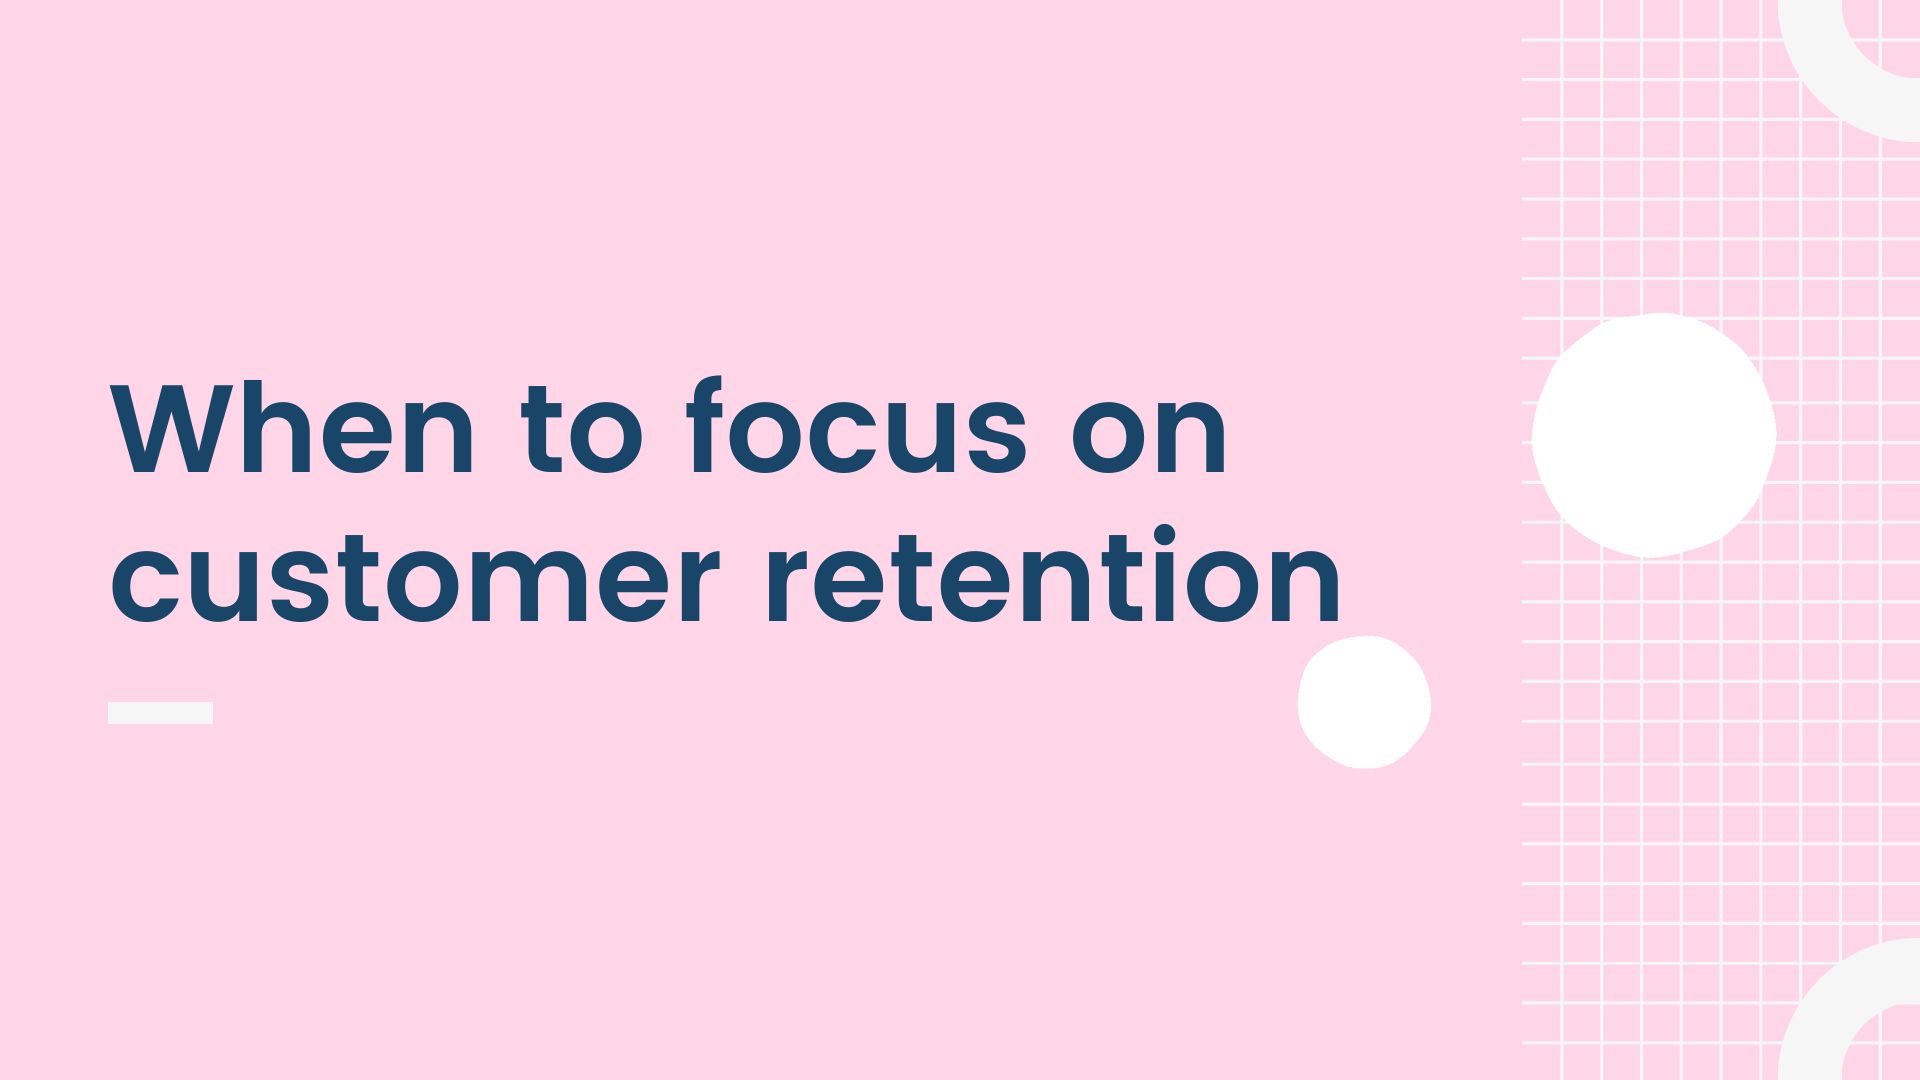 customer retention strategies when to focus on customer retention